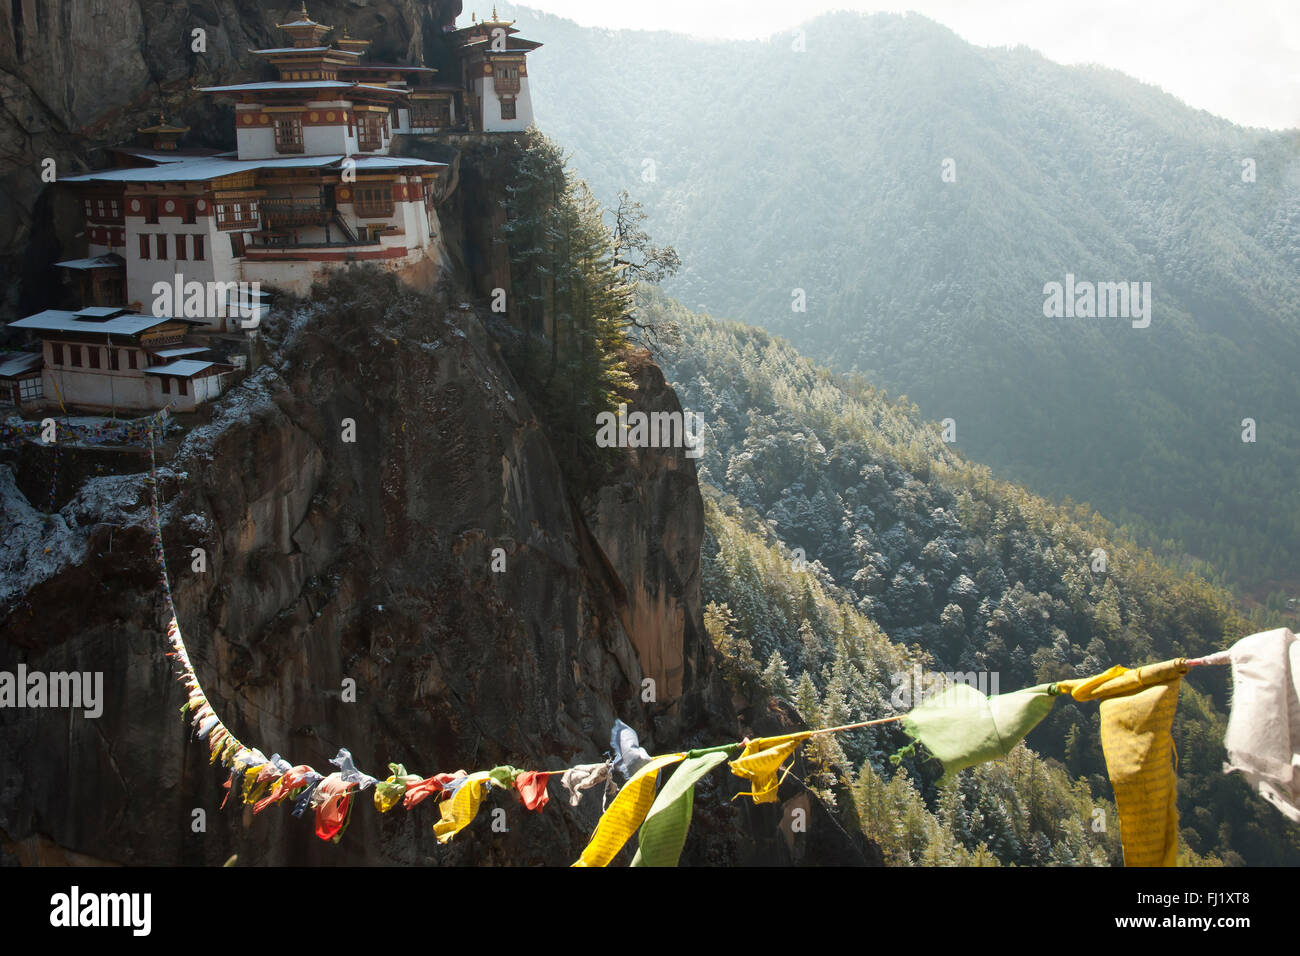 Monasterio de Taktsang (Tiger's Nest) - Bután Foto de stock